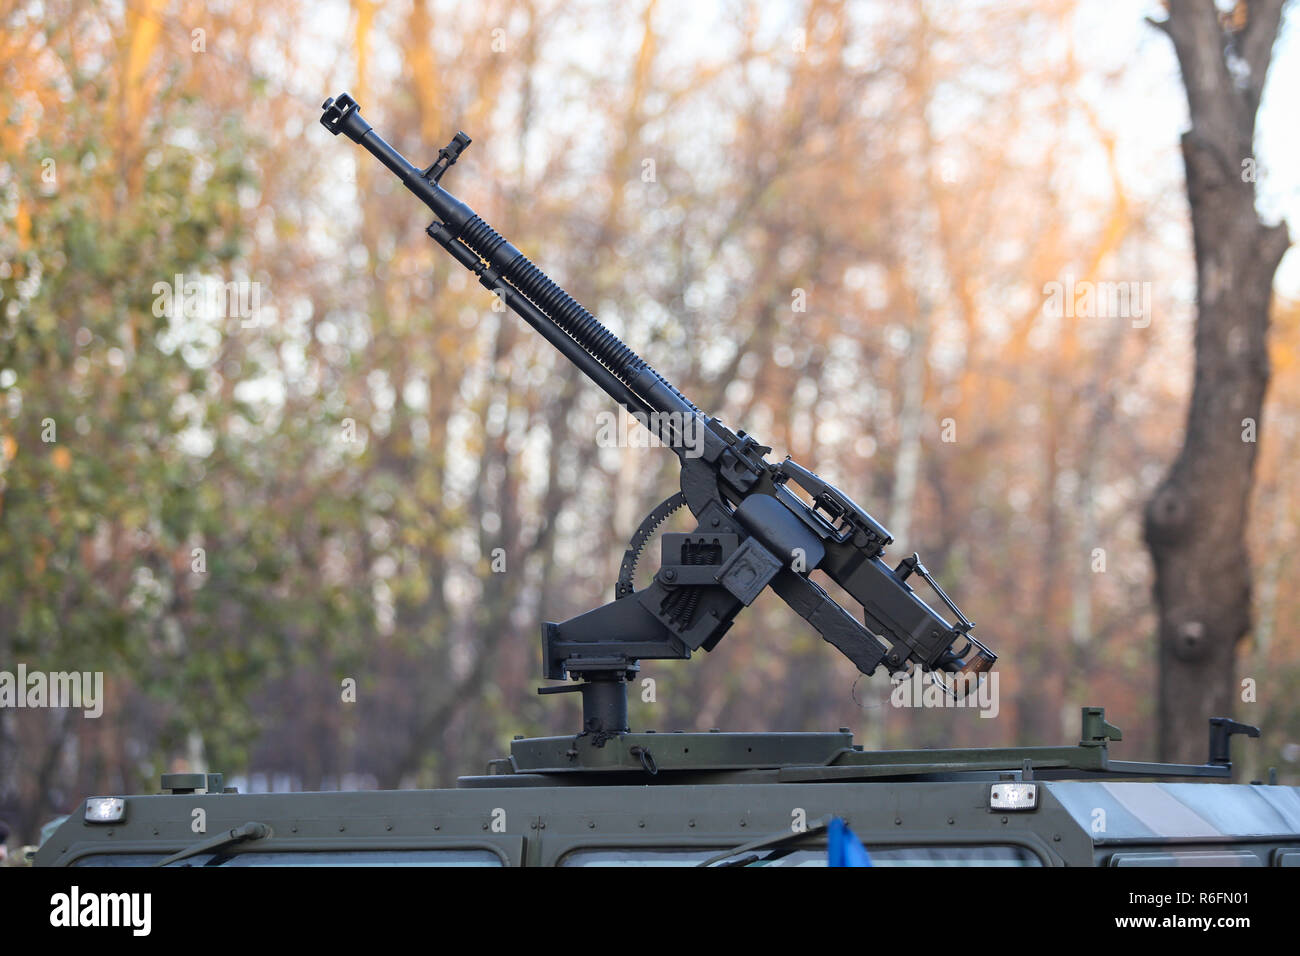 BUCHAREST, ROMANIA - December 1, 2018: 50 cal machine gun mounted on a Humvee military vehicle Stock Photo